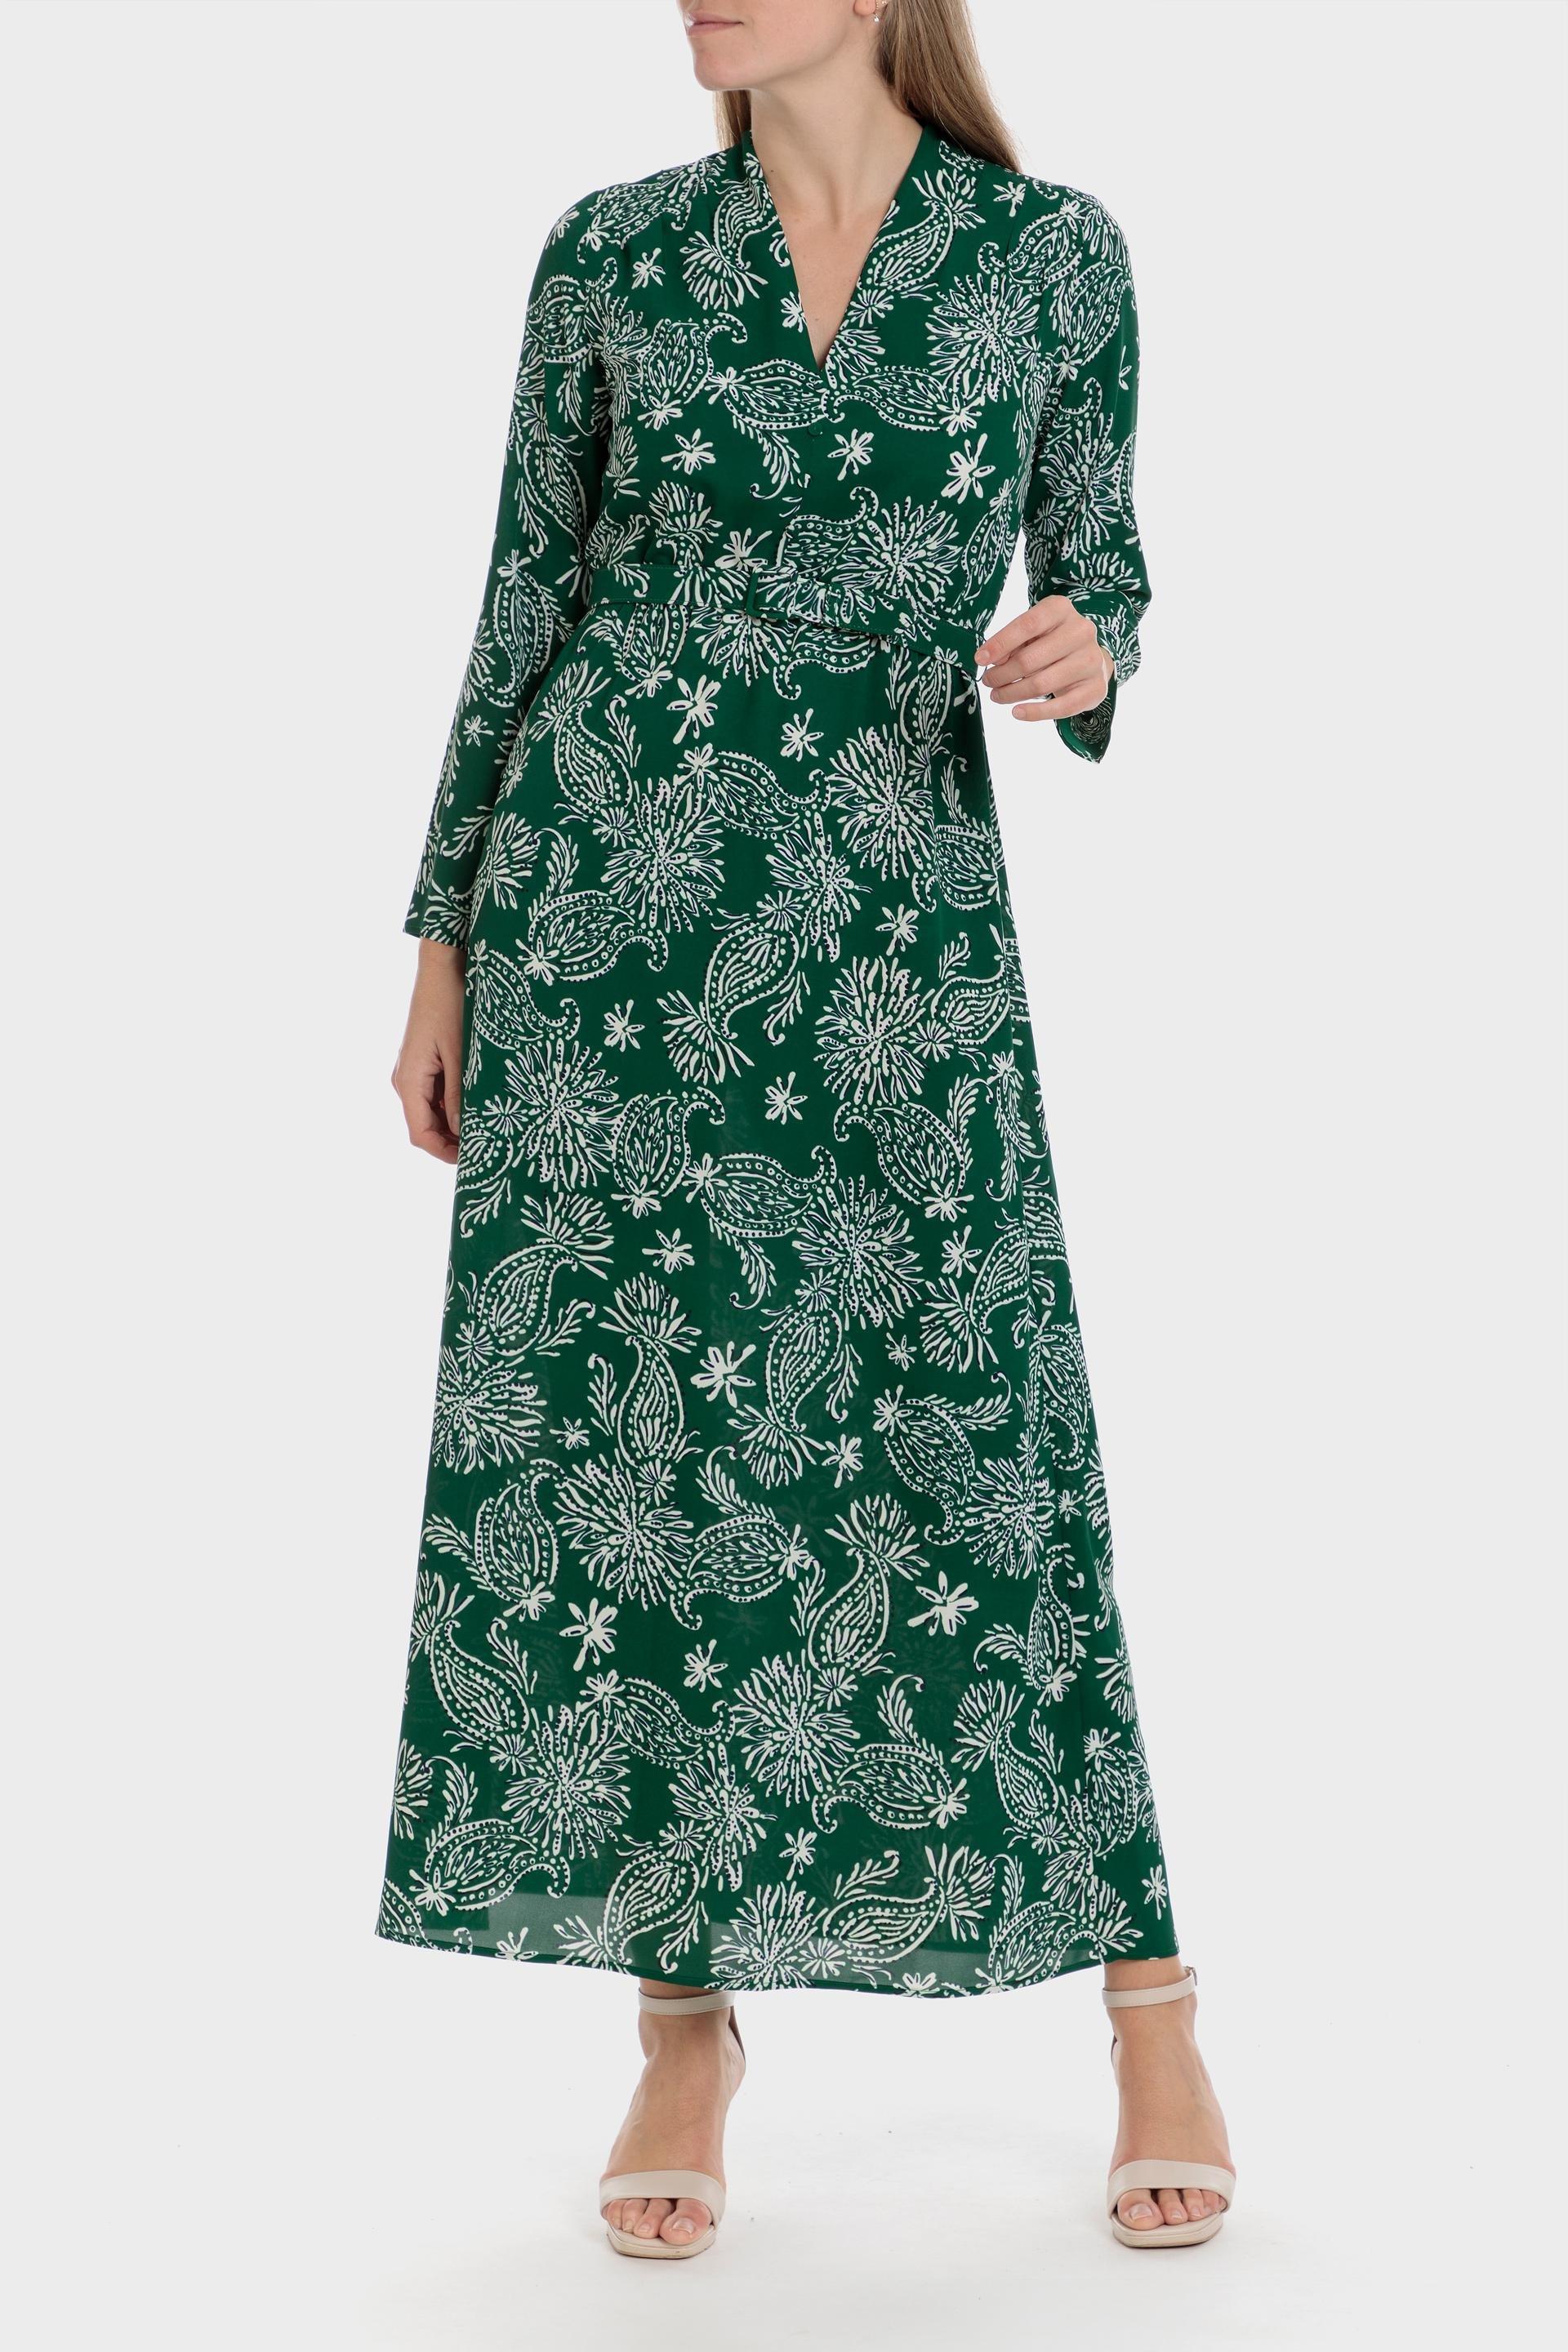 Punt Roma - Green Printed Dress